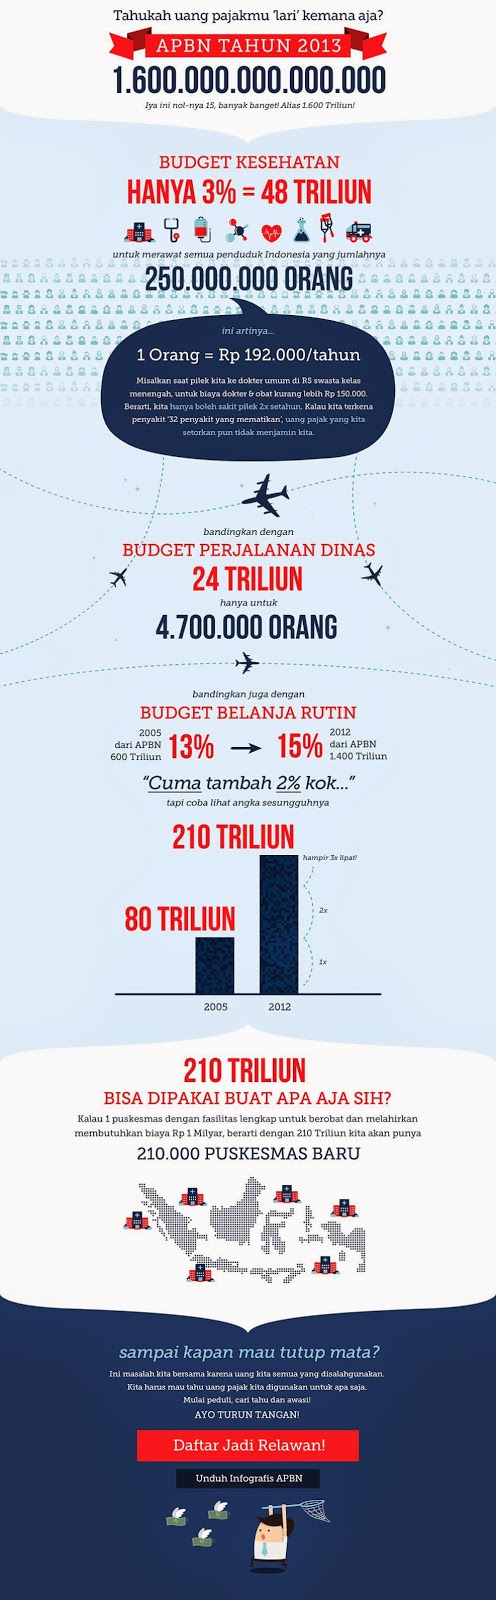 Infographic APBN